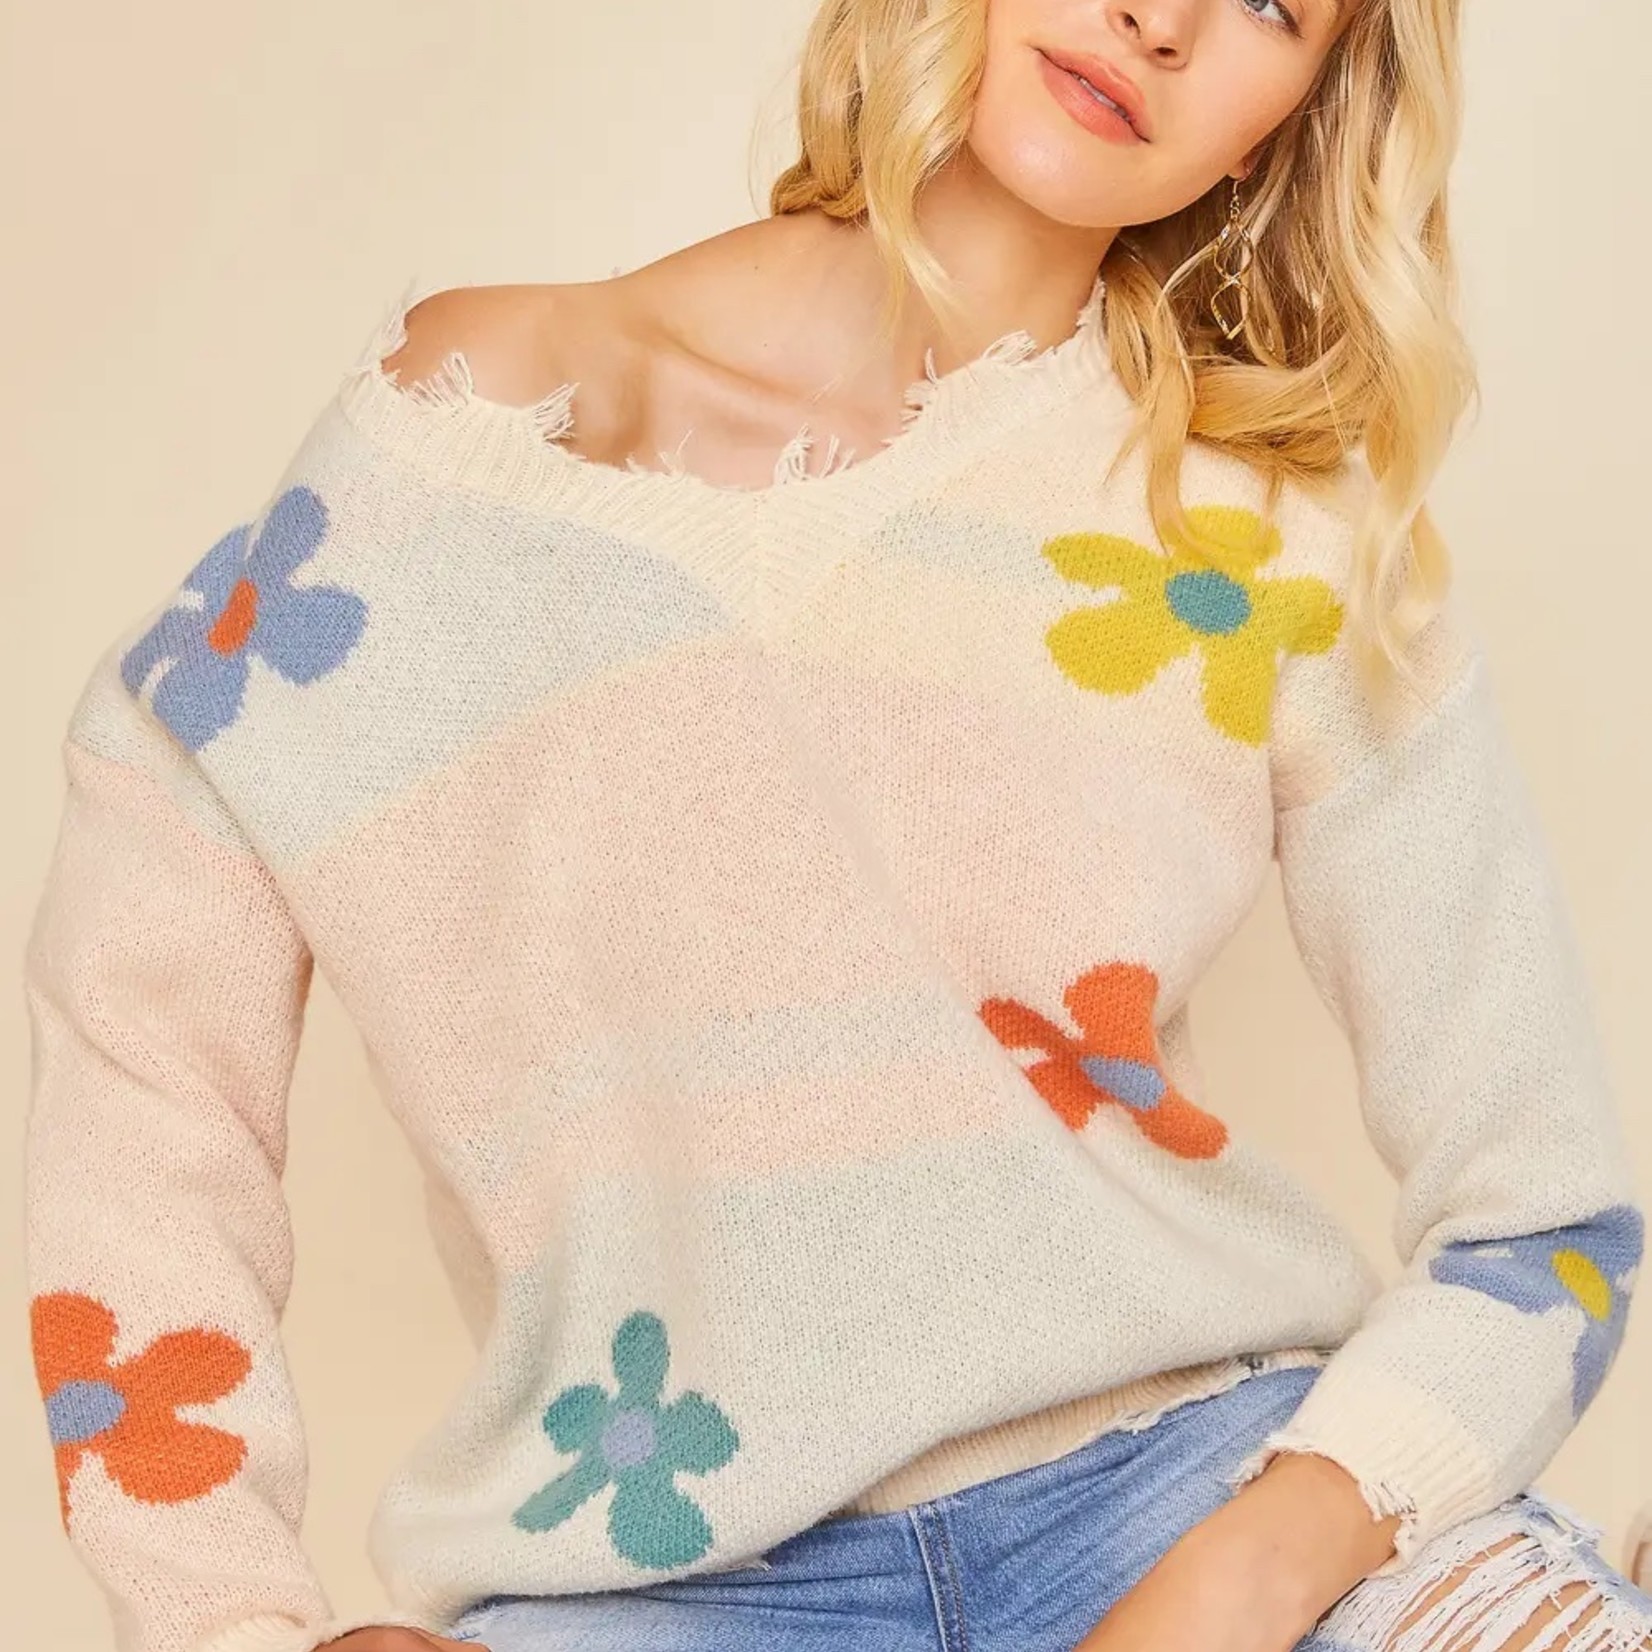 anniewear Flower Power Distressed Sweater